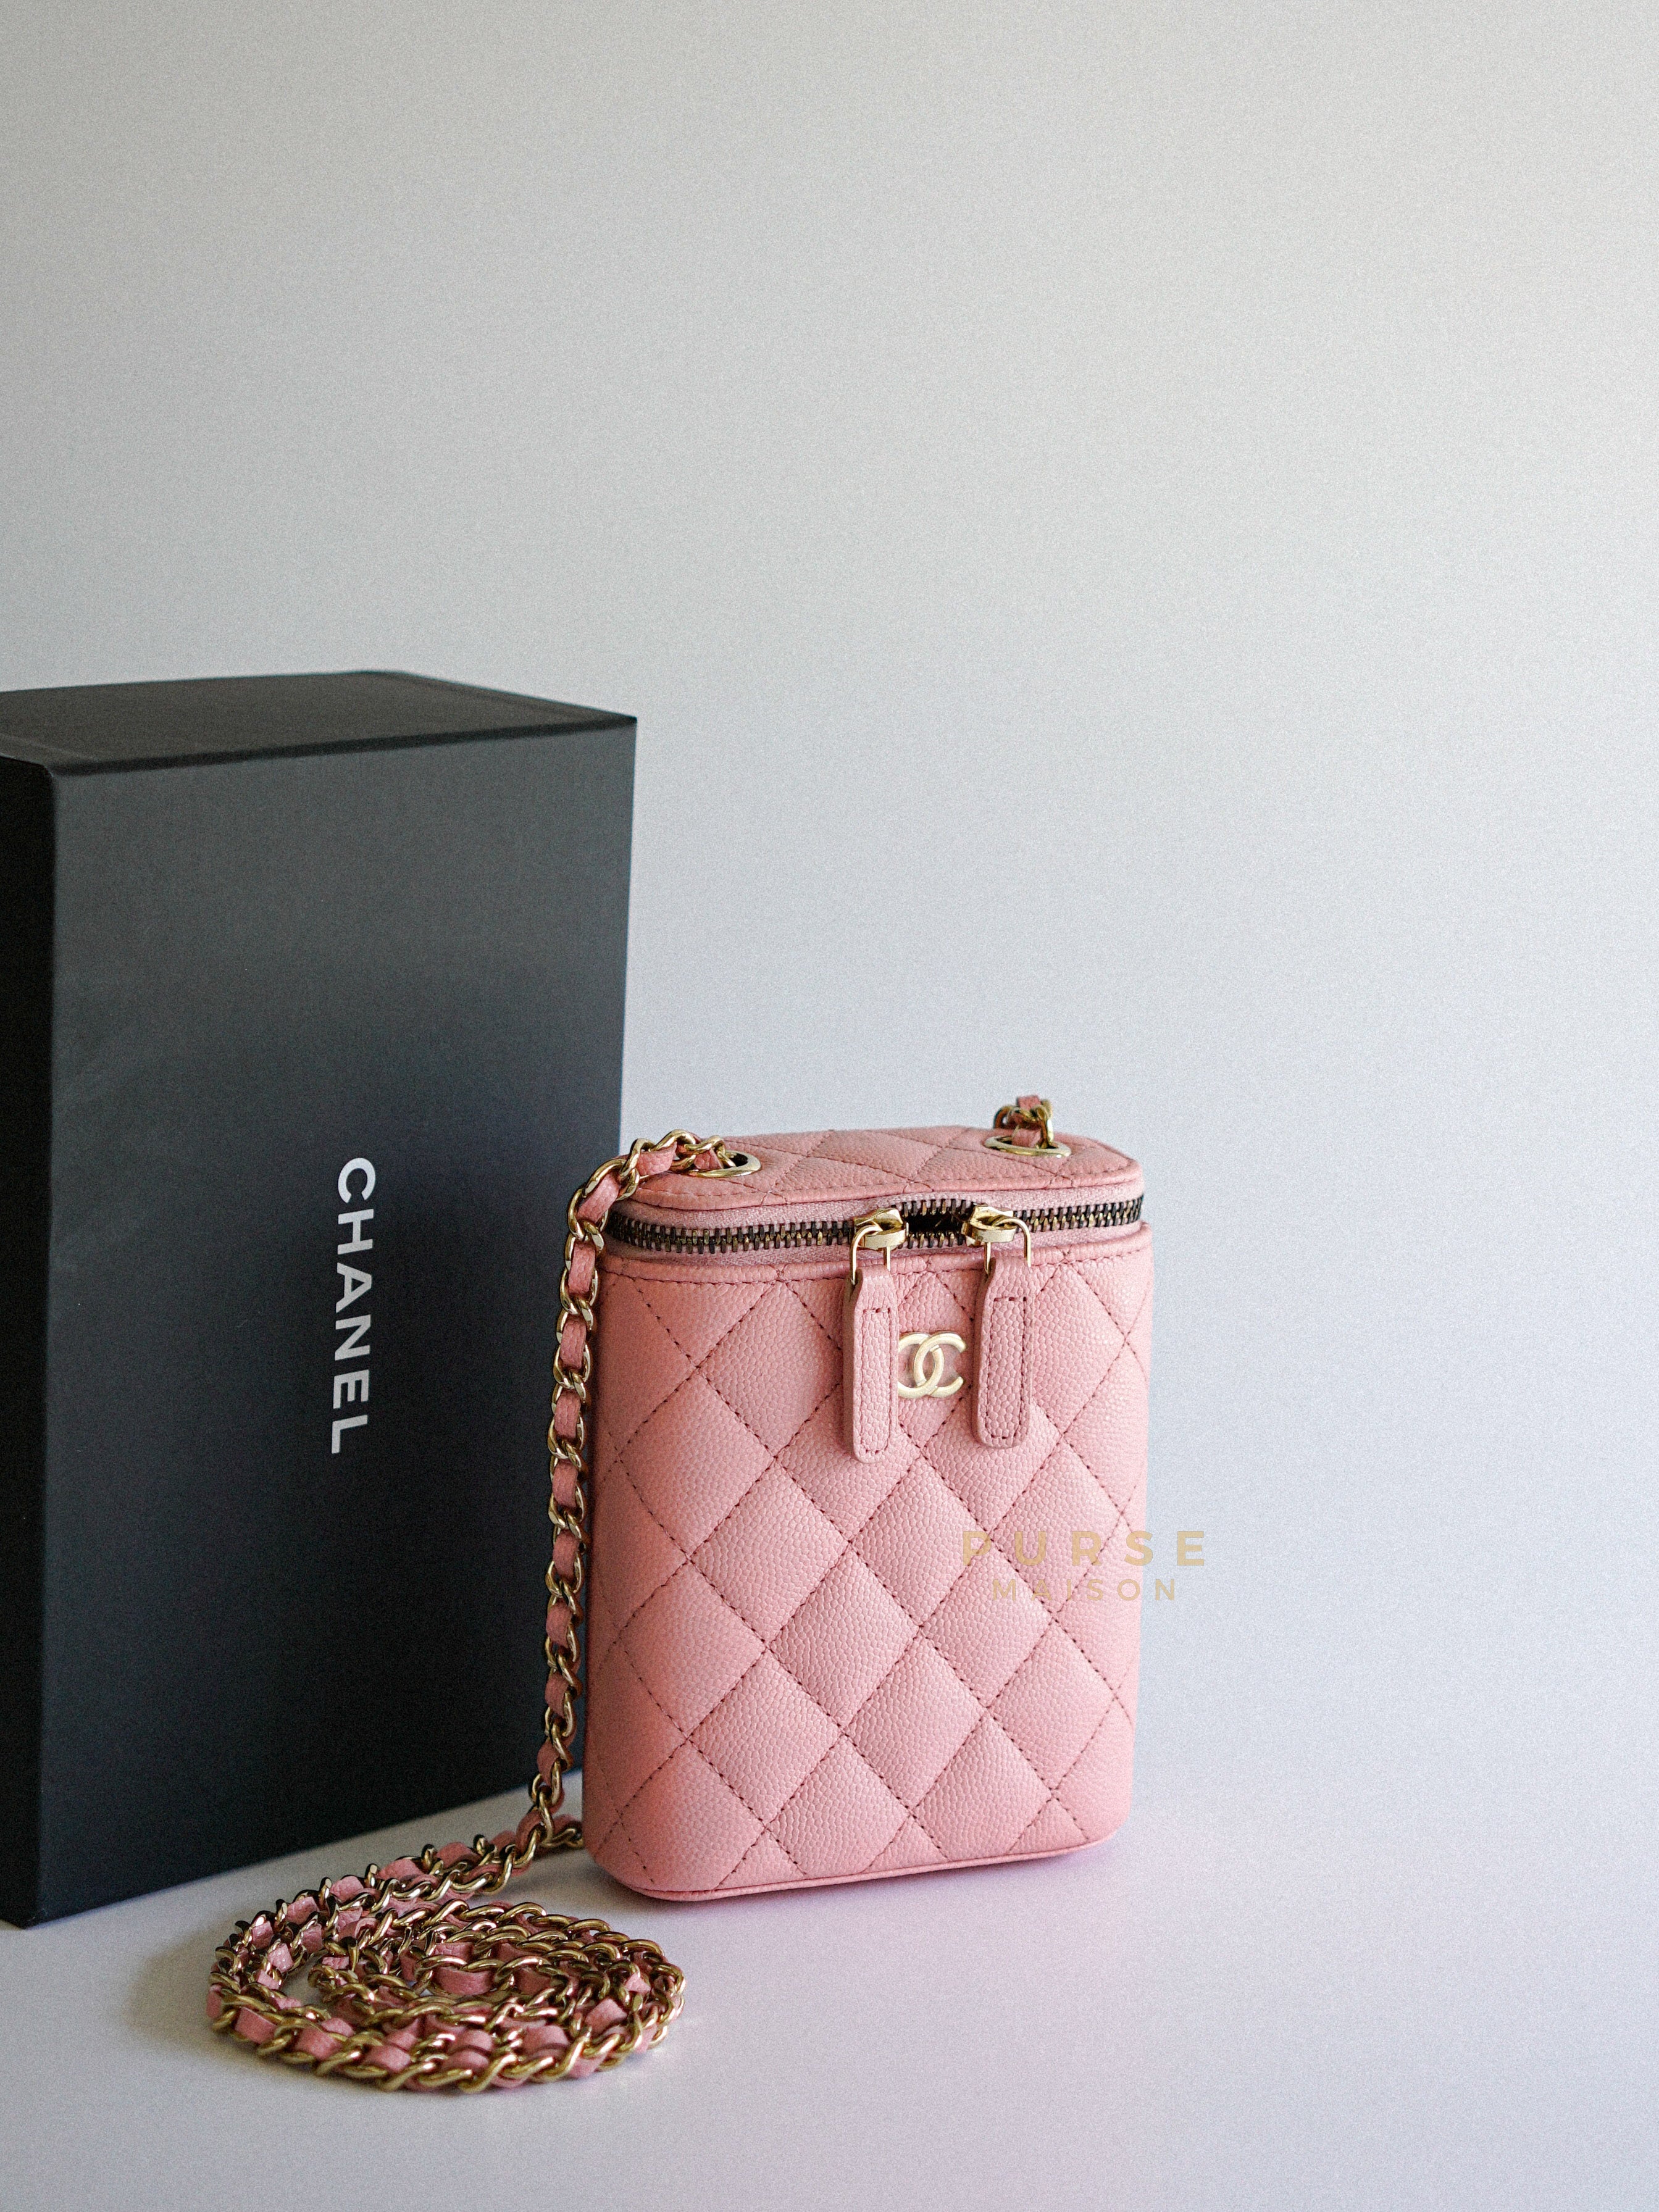 Mini Vertical Vanity 22c on Chain in Sakura Pink Caviar & Light Gold Hardware Series 31 | Purse Maison Luxury Bags Shop